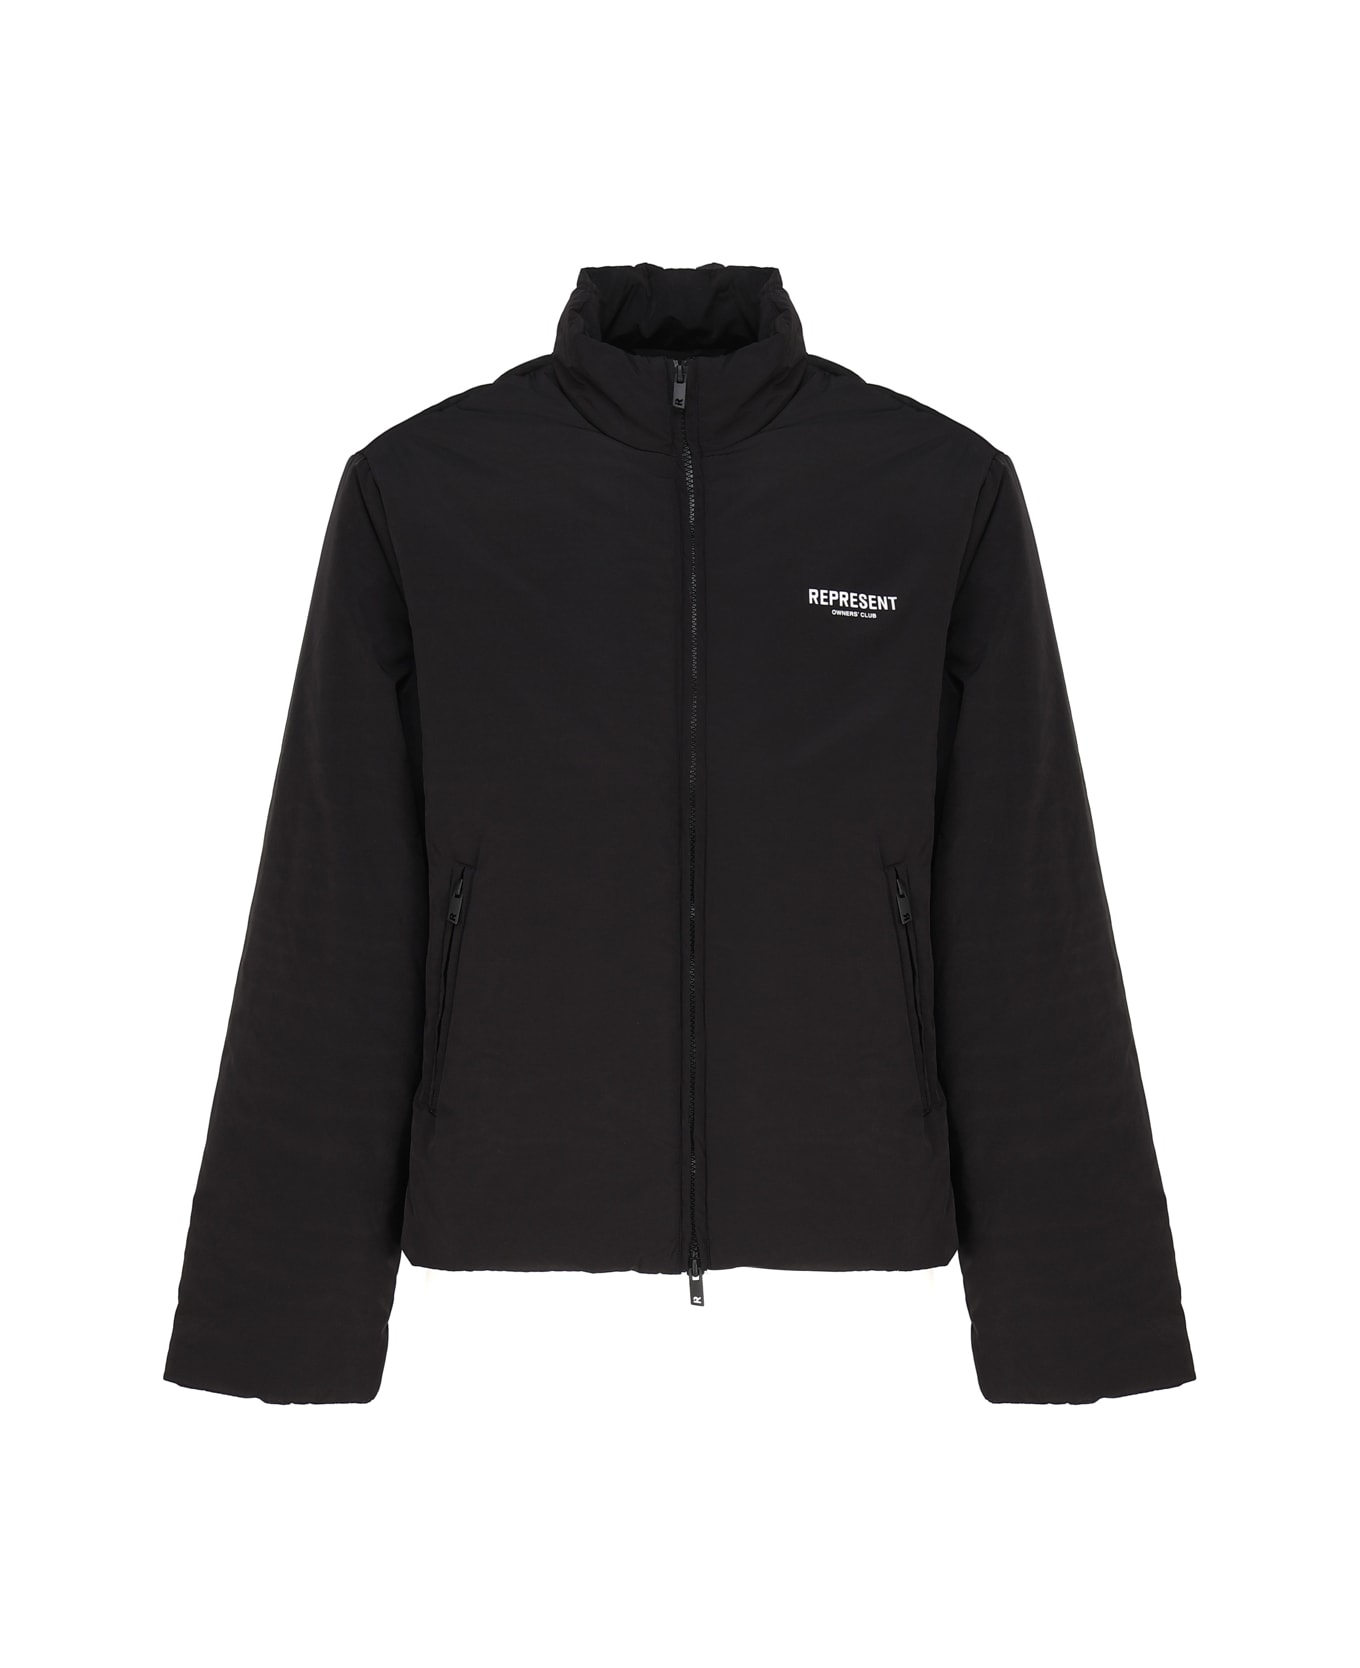 REPRESENT High Neck Jacket With Zip Closure - Black ジャケット